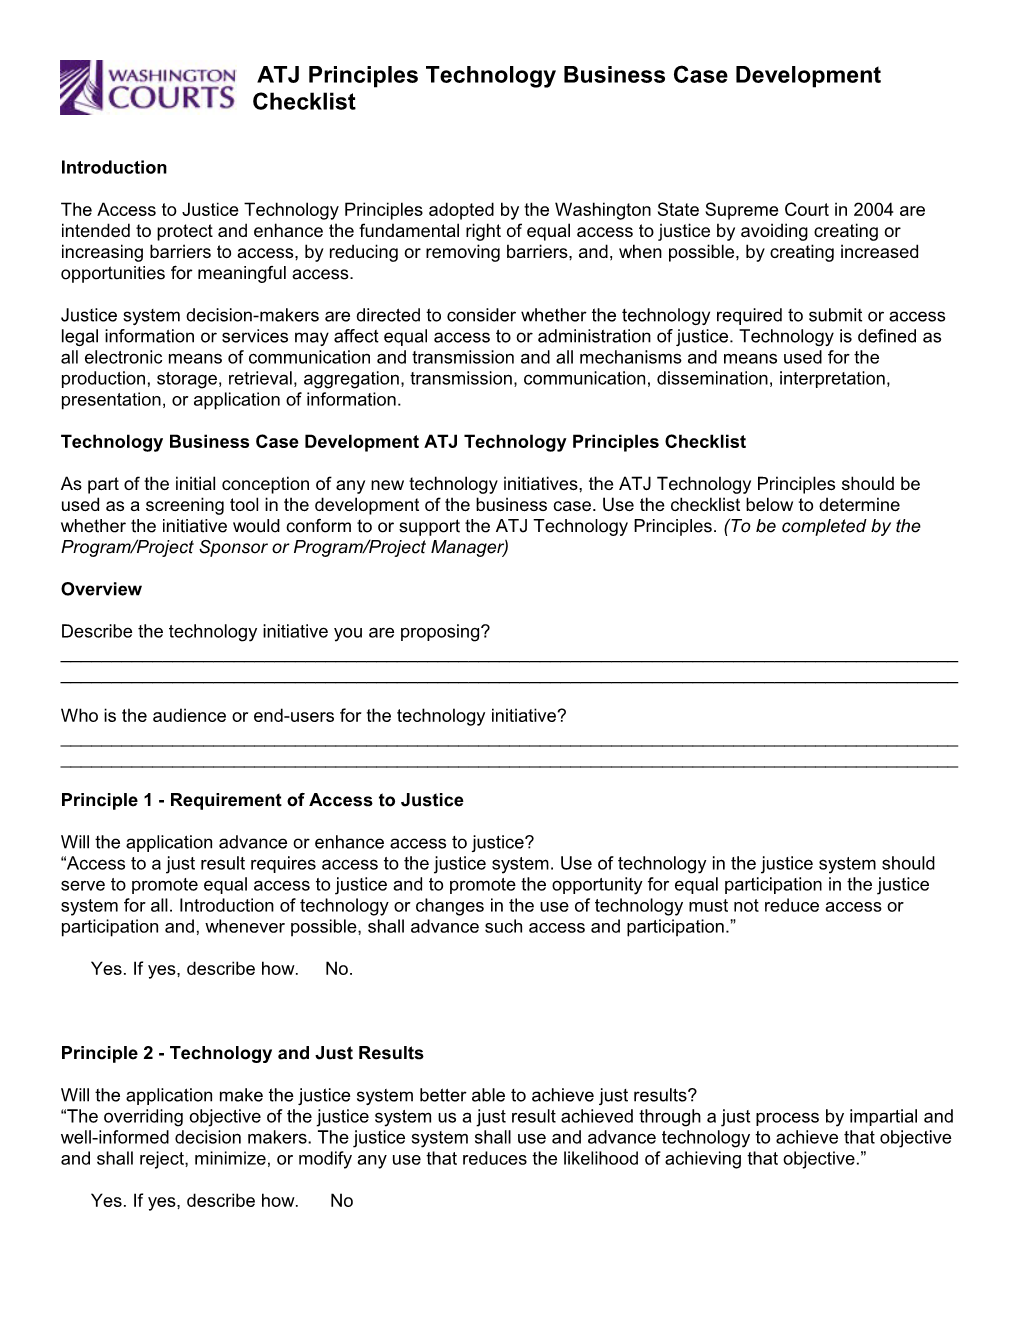 Technology Business Case Development ATJ Technology Principles Checklist